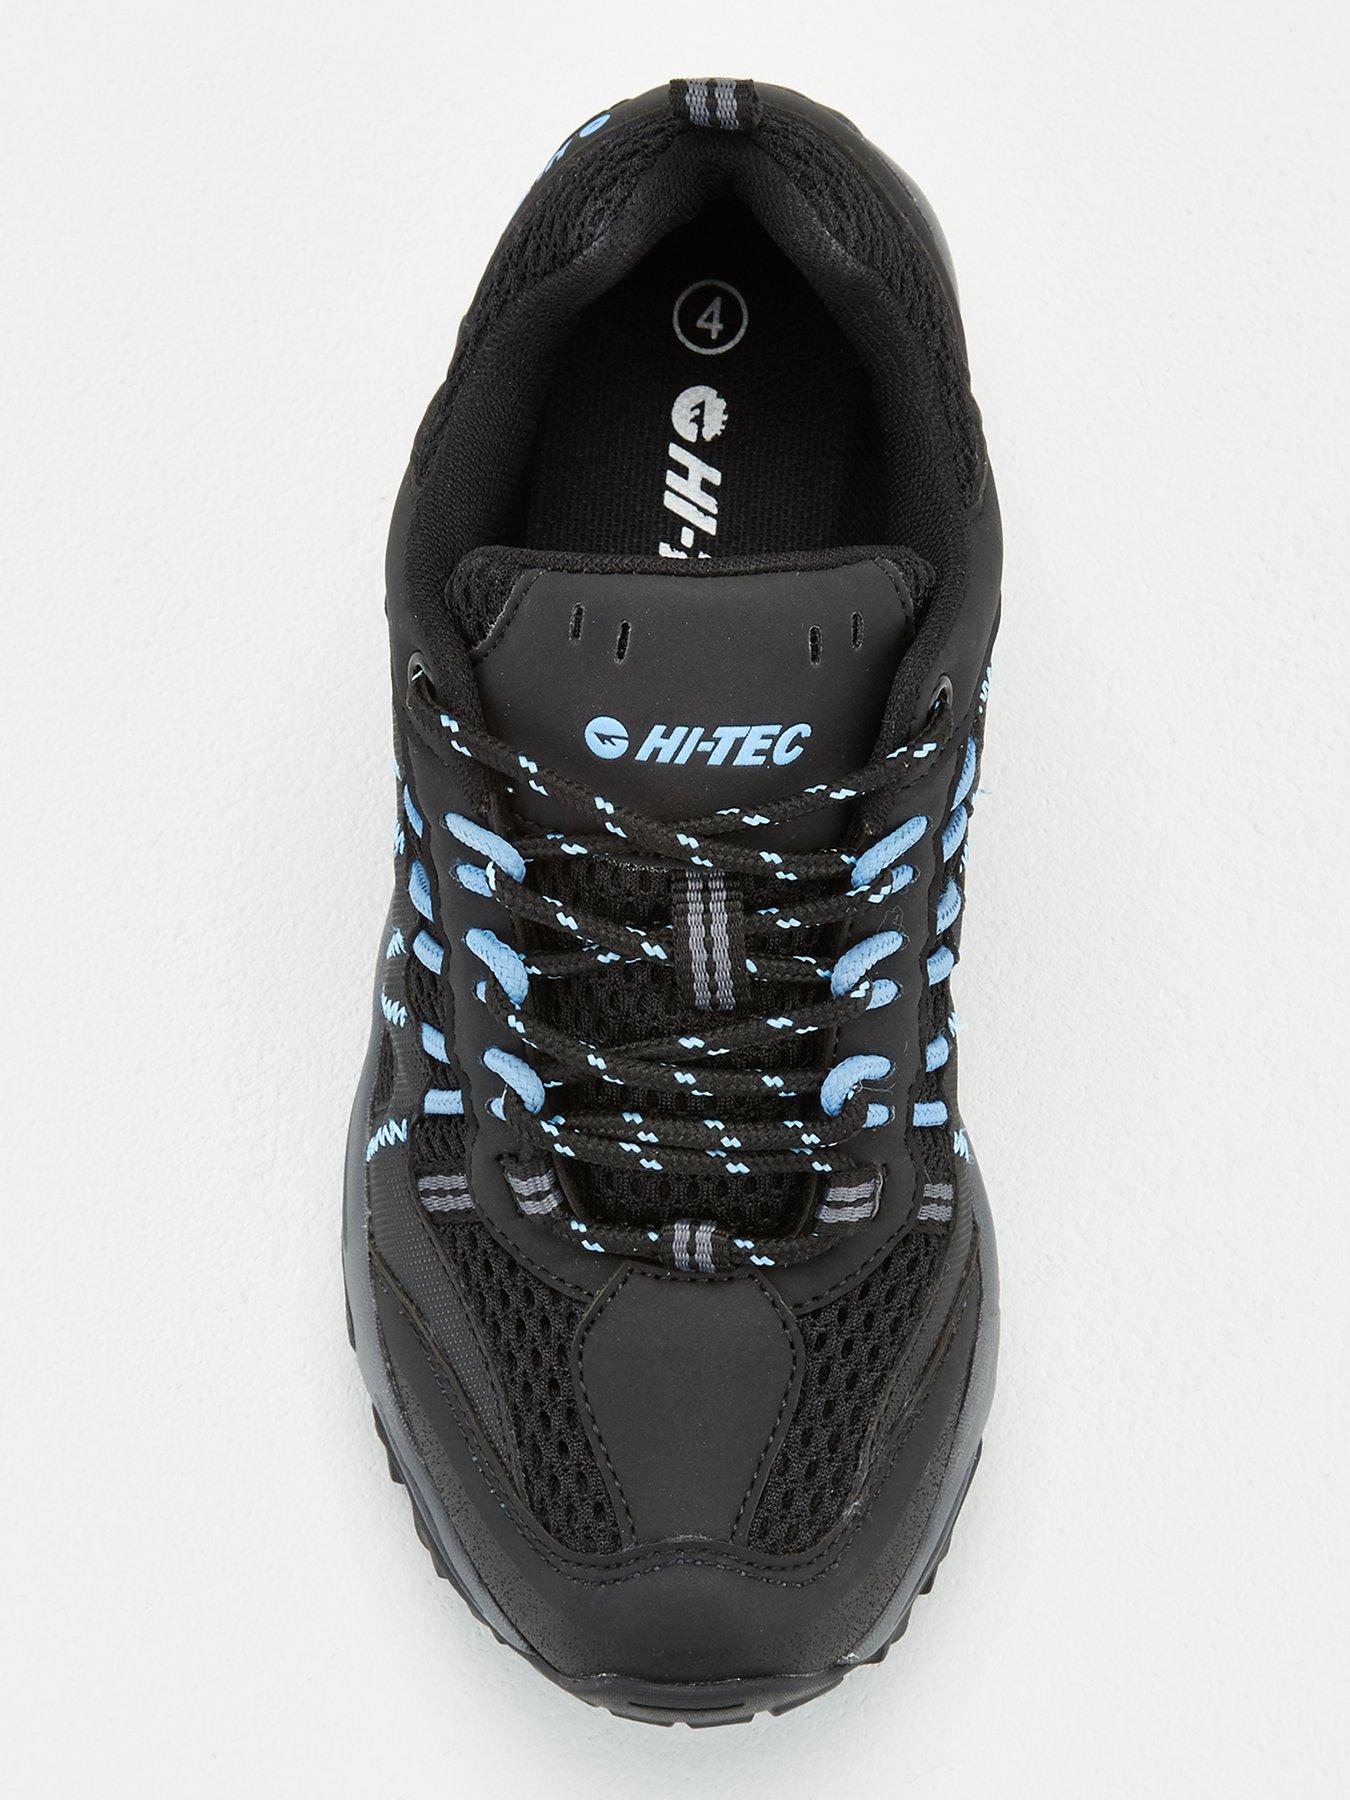  Jaguar Walking Shoe - Black/Blue